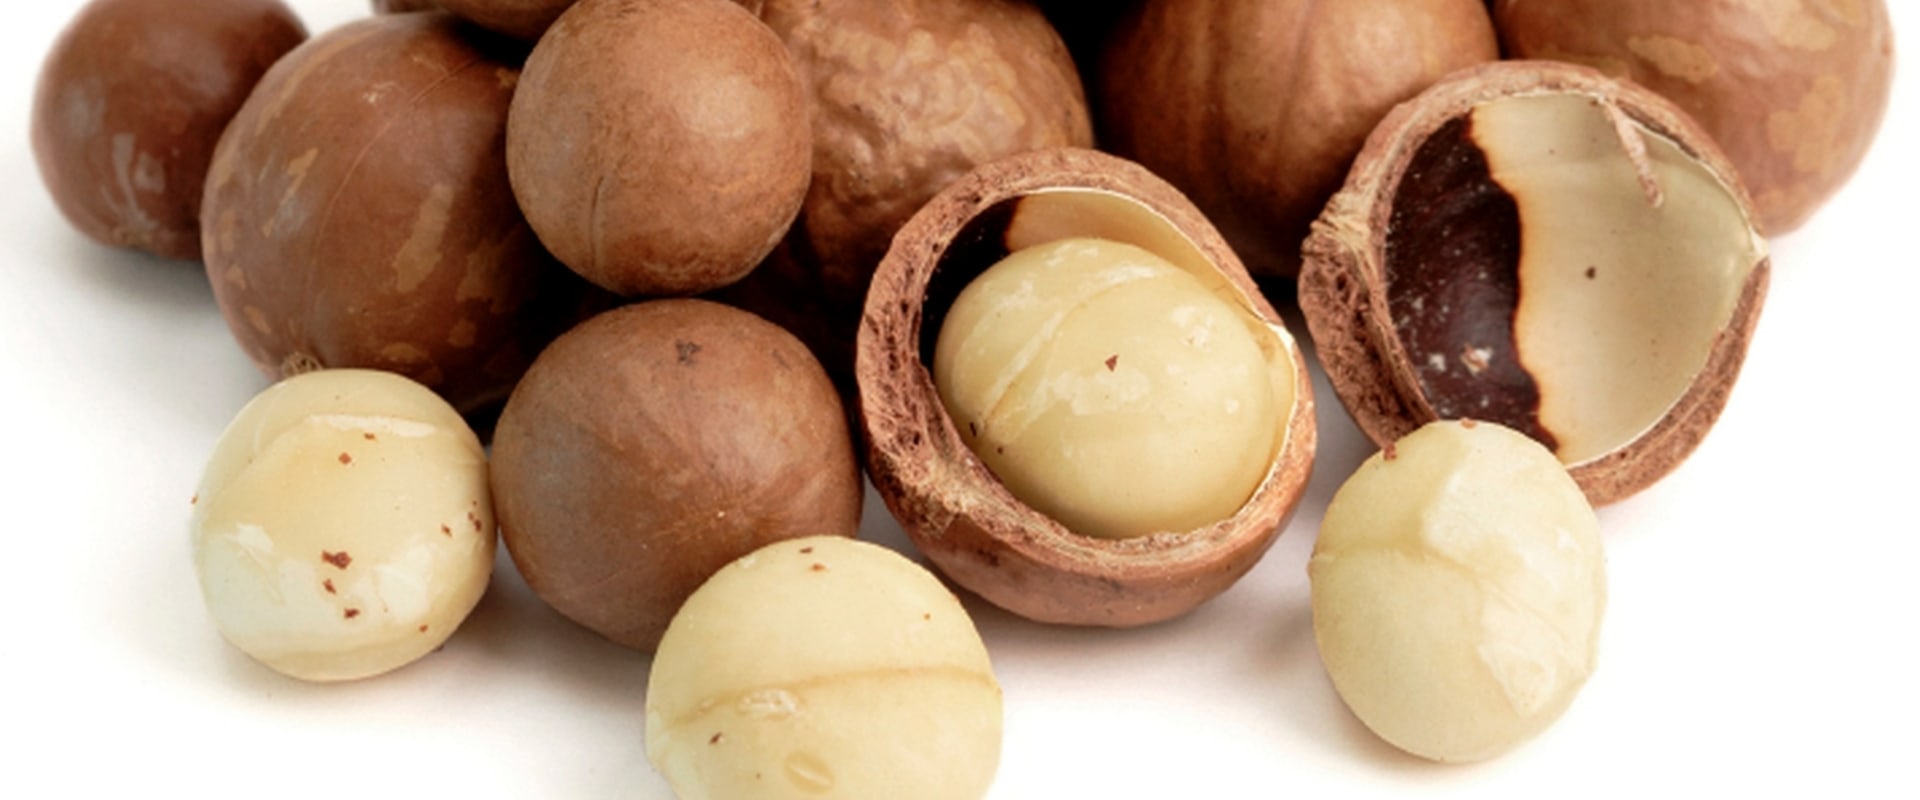 Bulk macadamia nuts for sale?